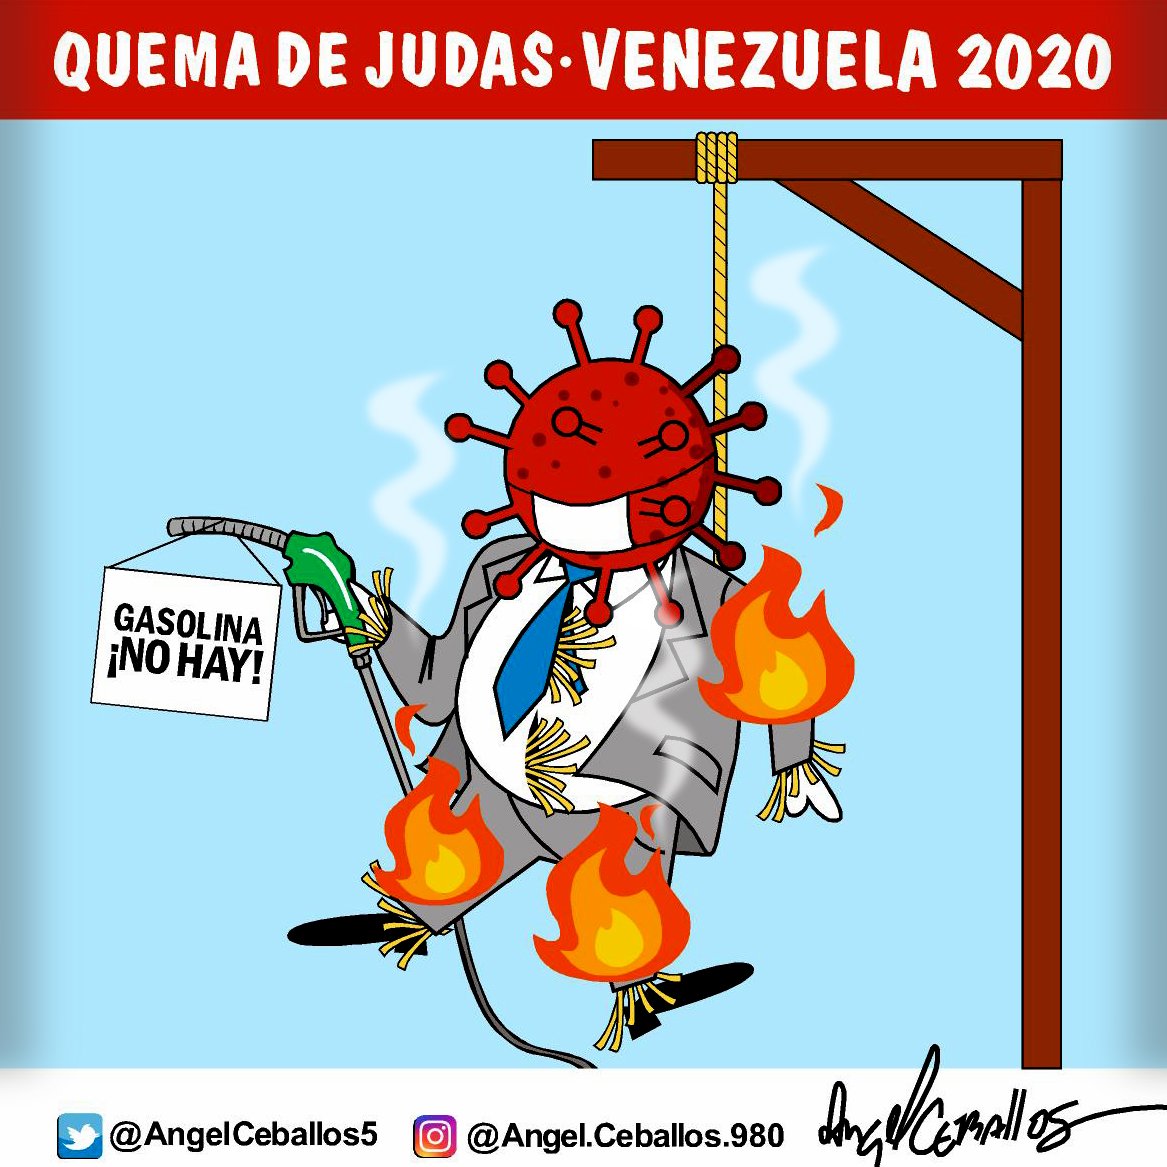 CaricaturasVE on Twitter: "#QuemaDeJudas #SemanaSanta2020 #Venezuela #DomingodeResurreccion #CuarentenaExtendida #caricatura @AngelCeballos5 https://t.co/beaCLSuvQy" / Twitter